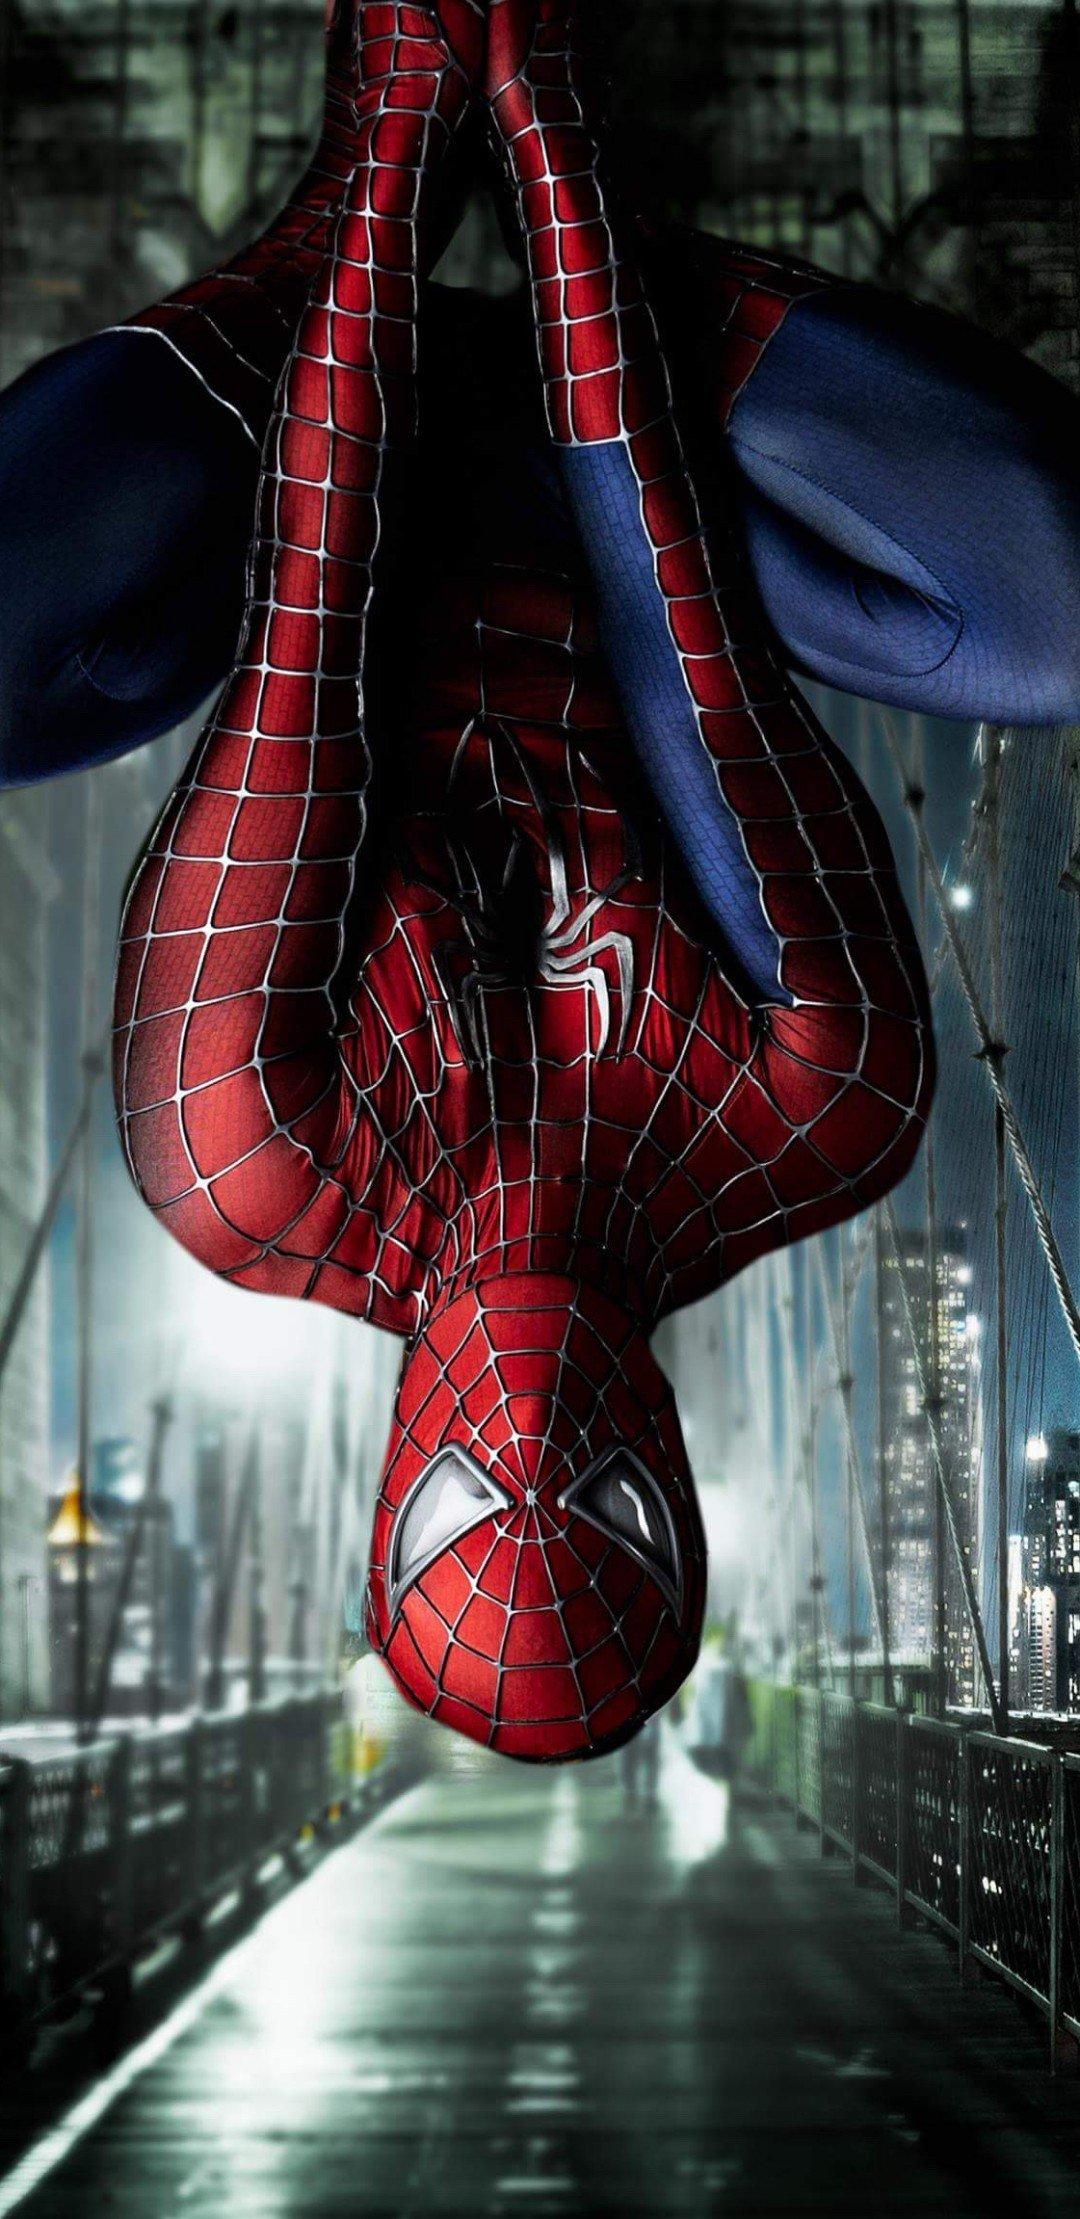 Spiderman Hanging Upside Down Wallpaper Mobcup